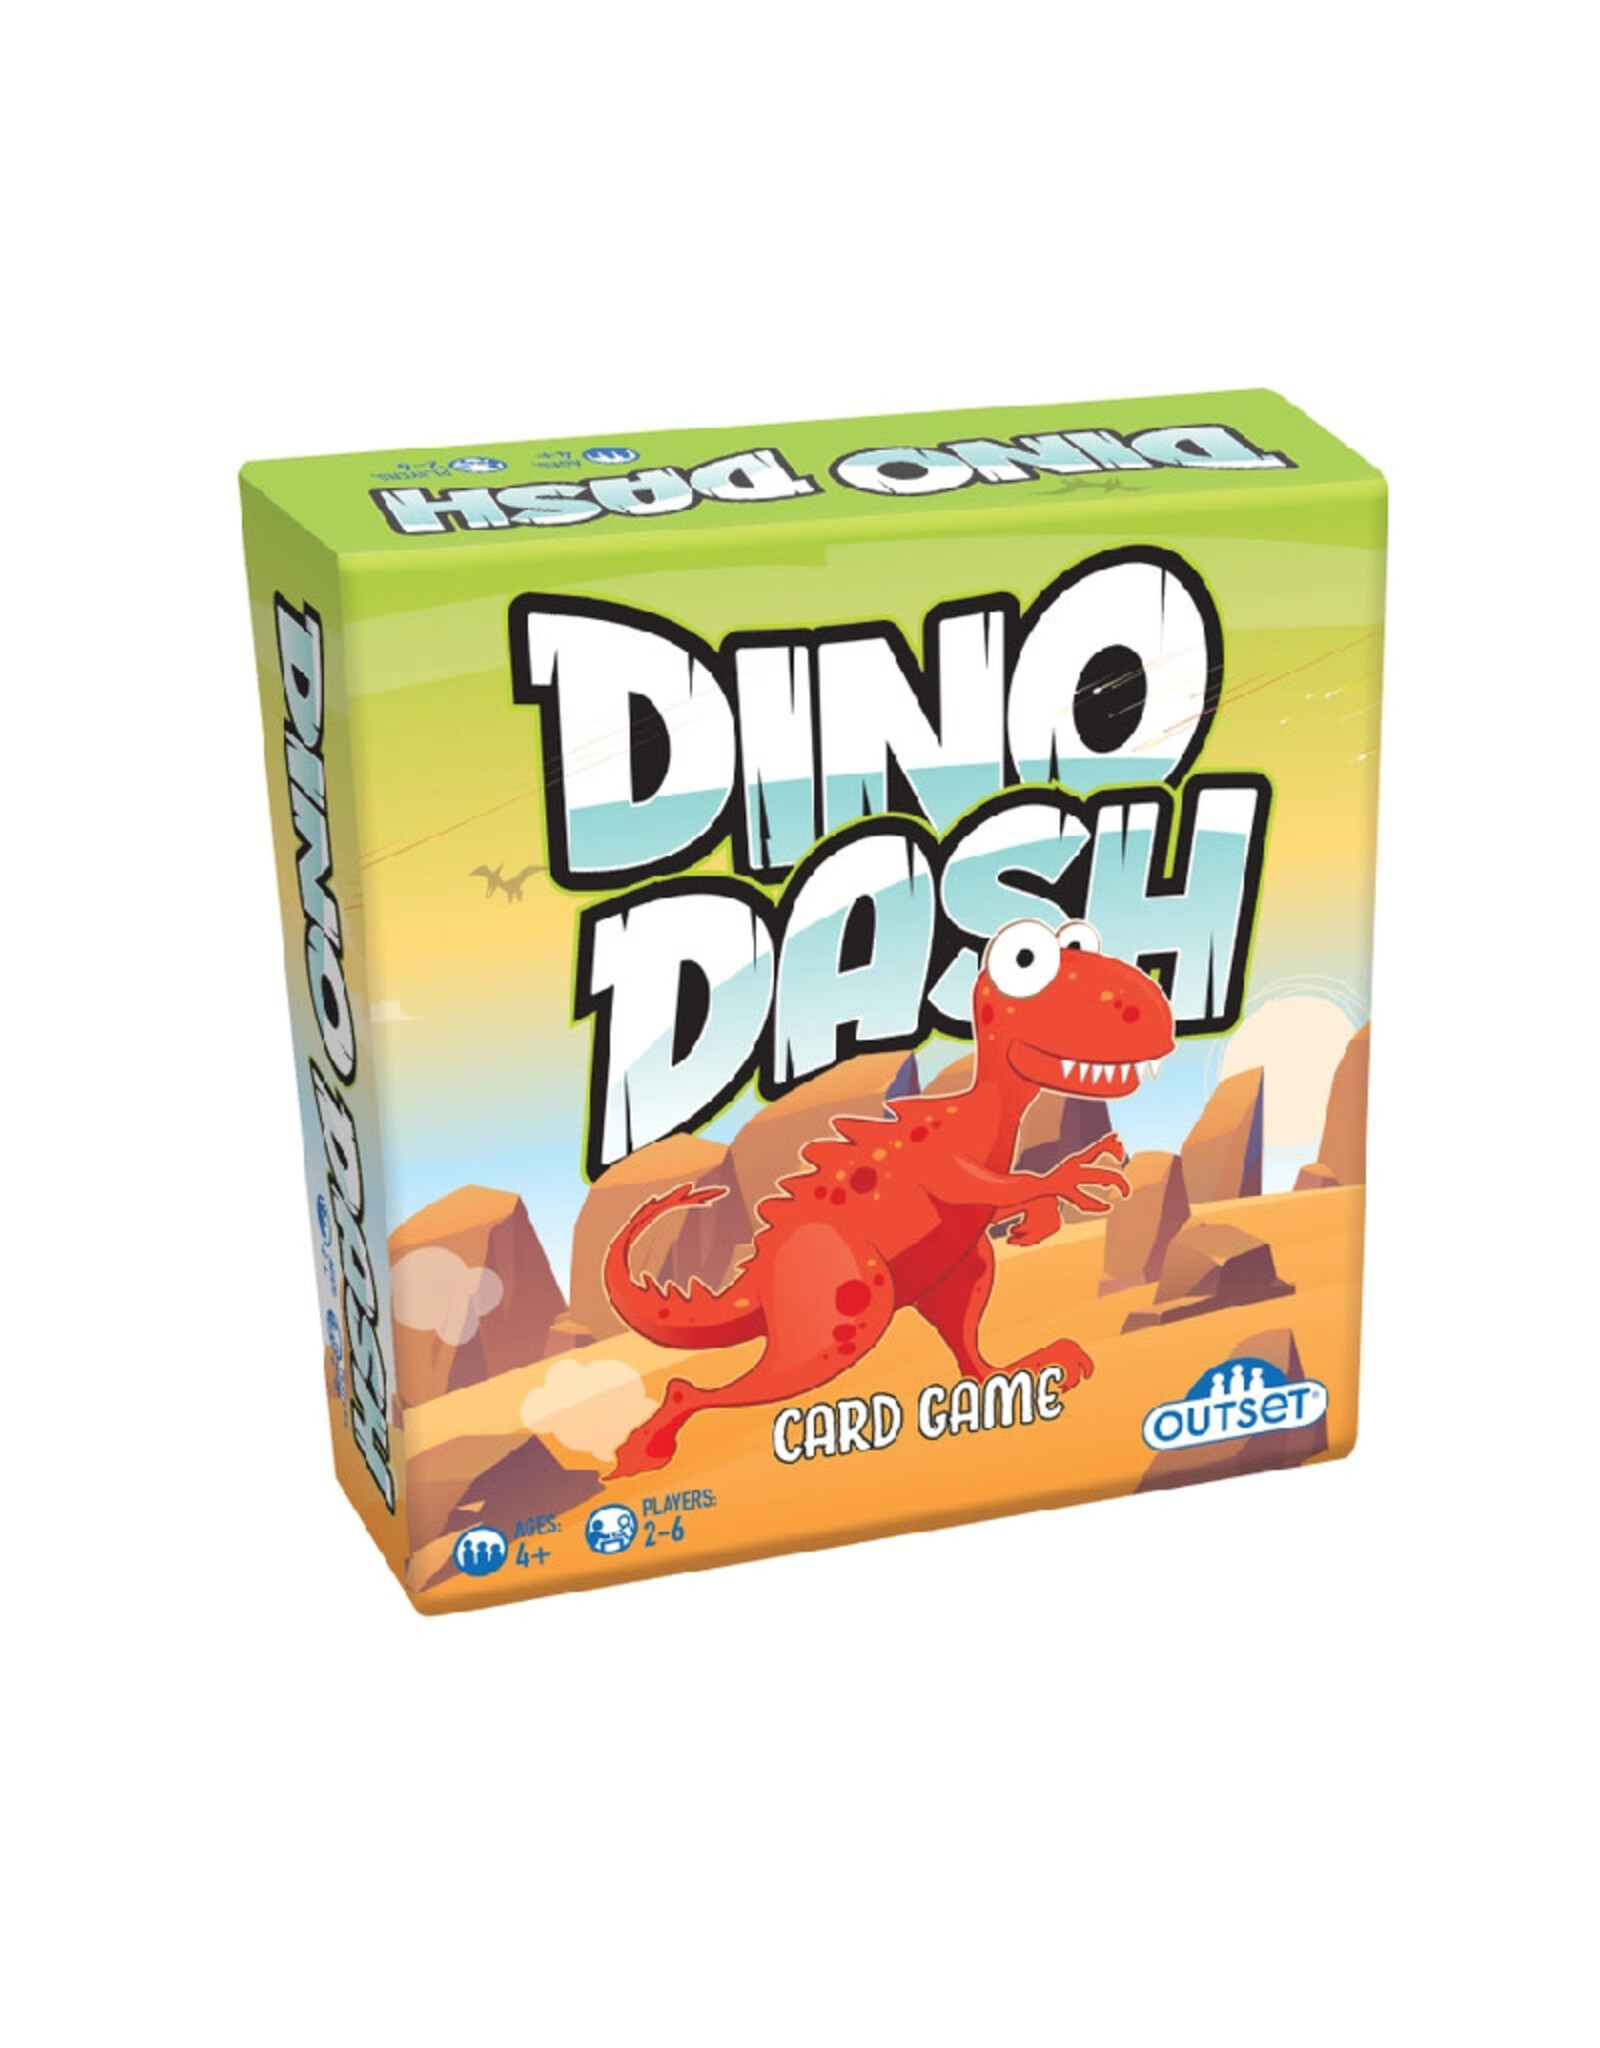 Misc Dino Dash